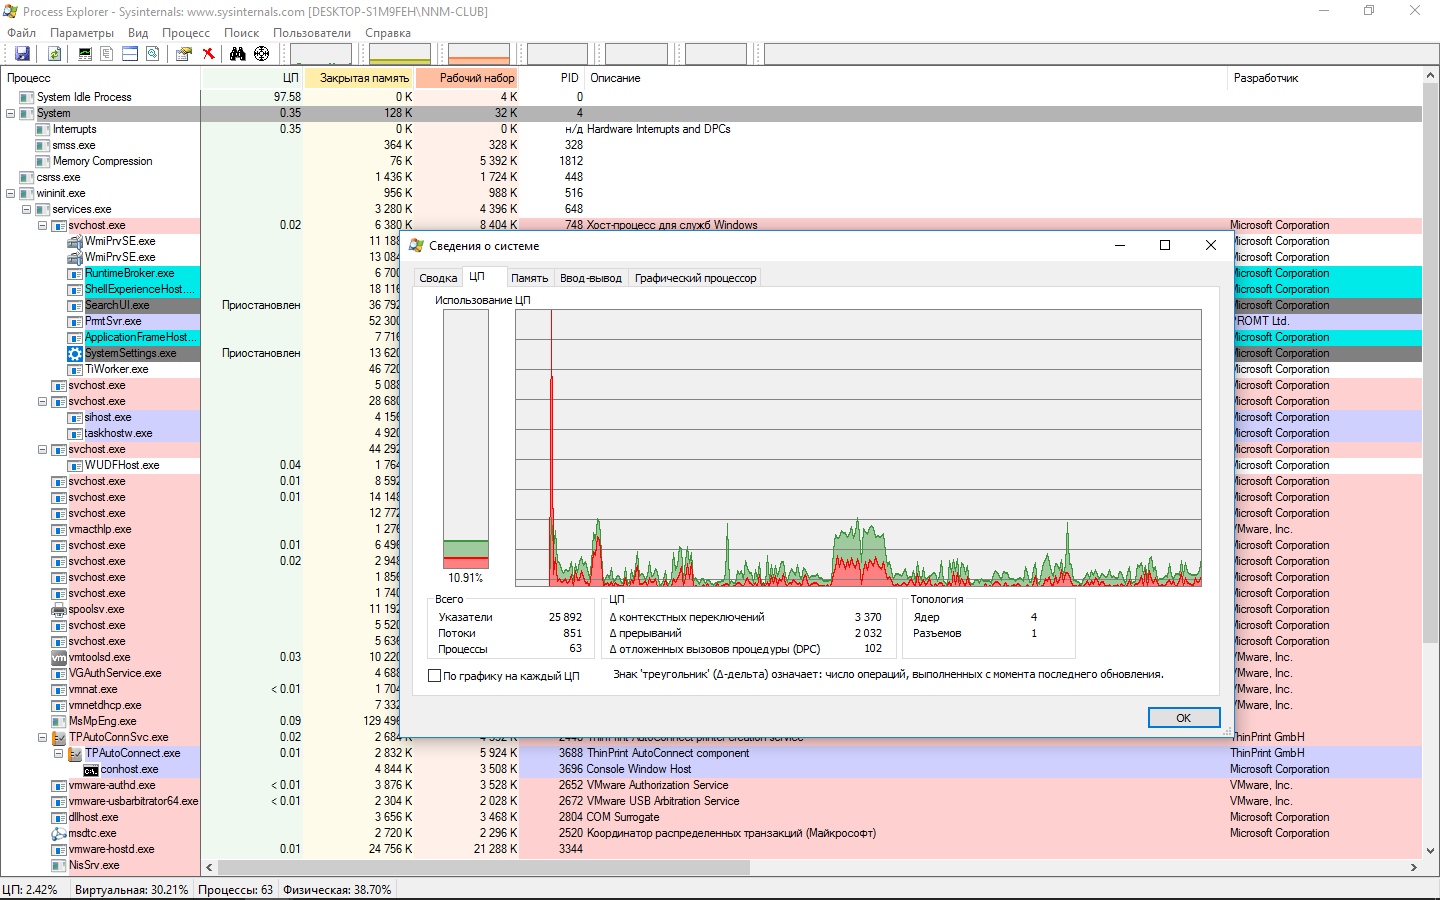 Process Explorer 17.05 instaling